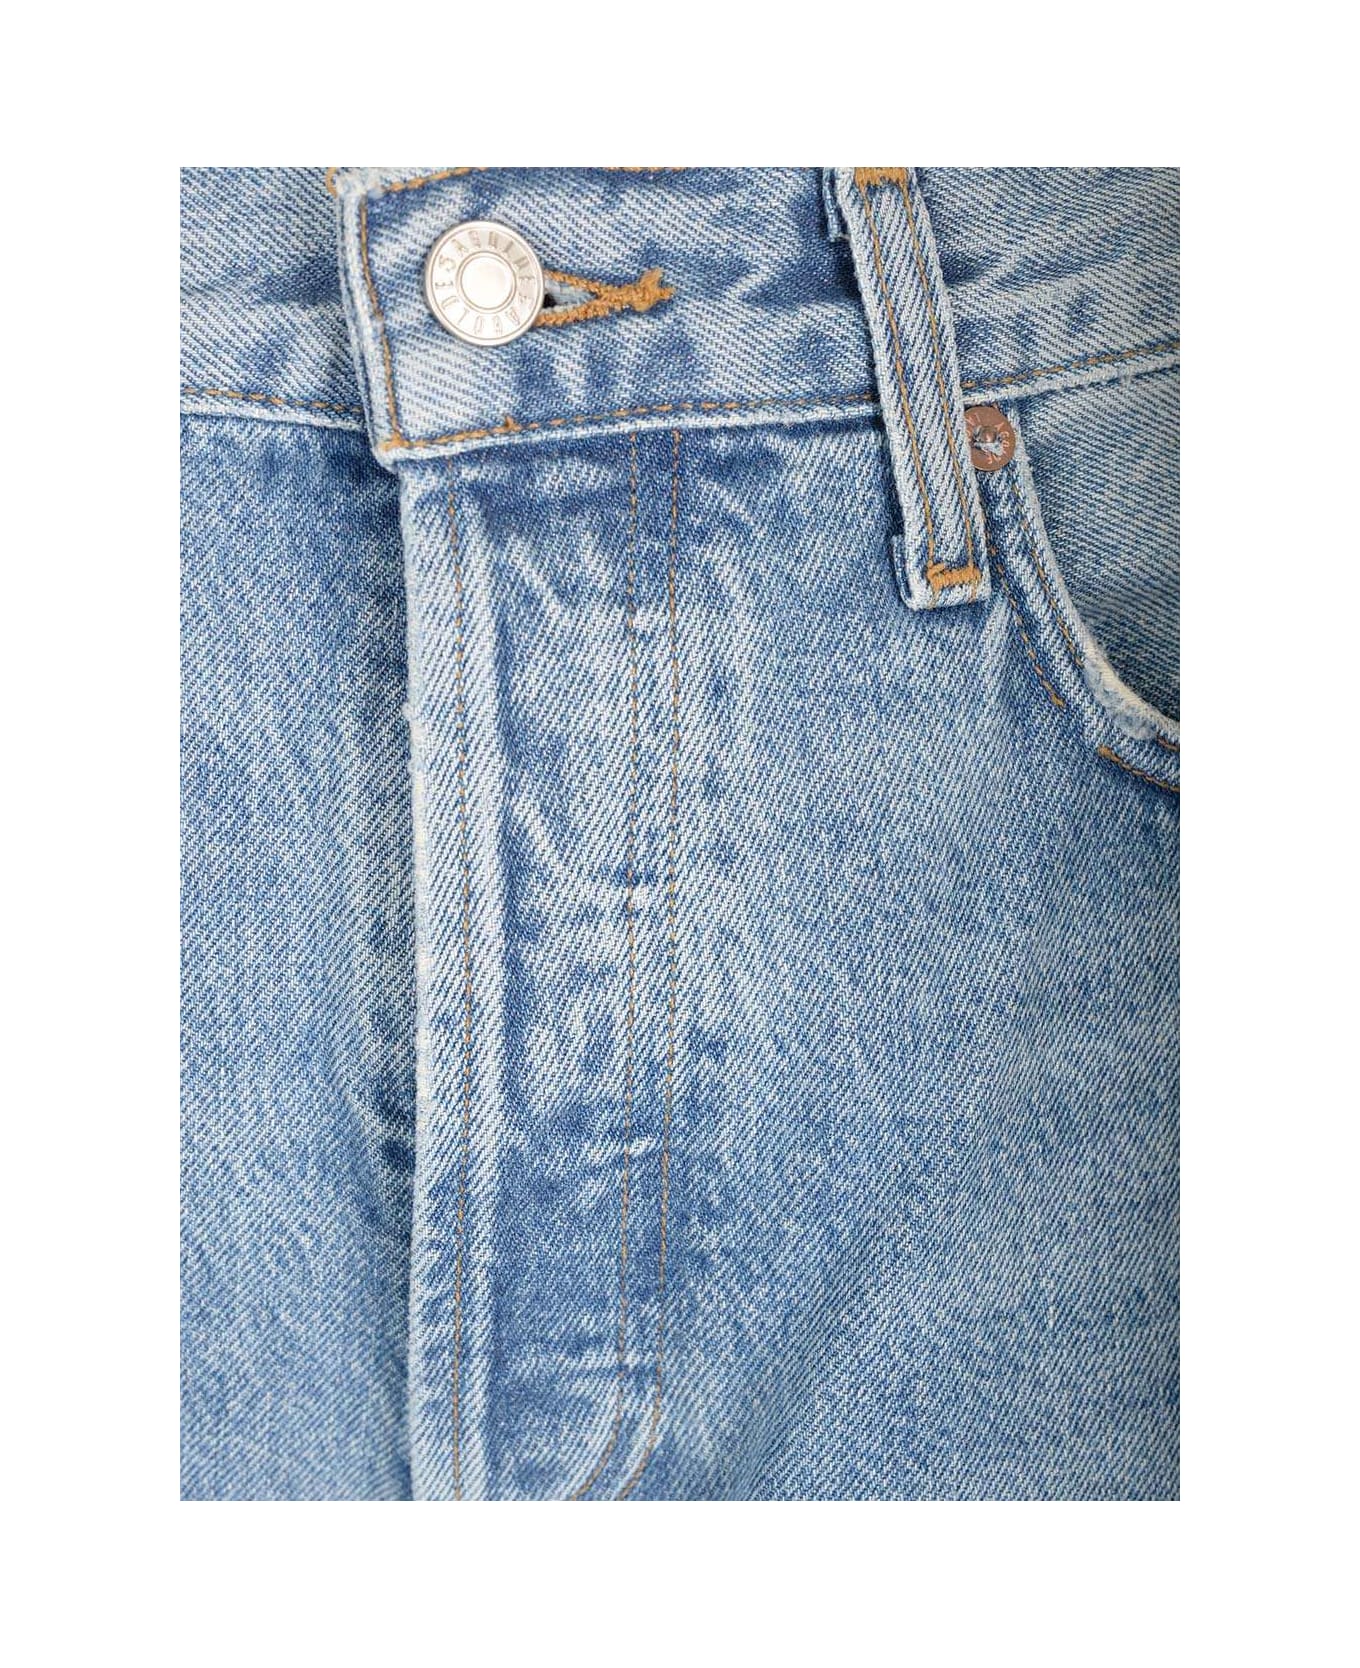 AGOLDE Light Blue Baggy Jeans - LIBER デニム